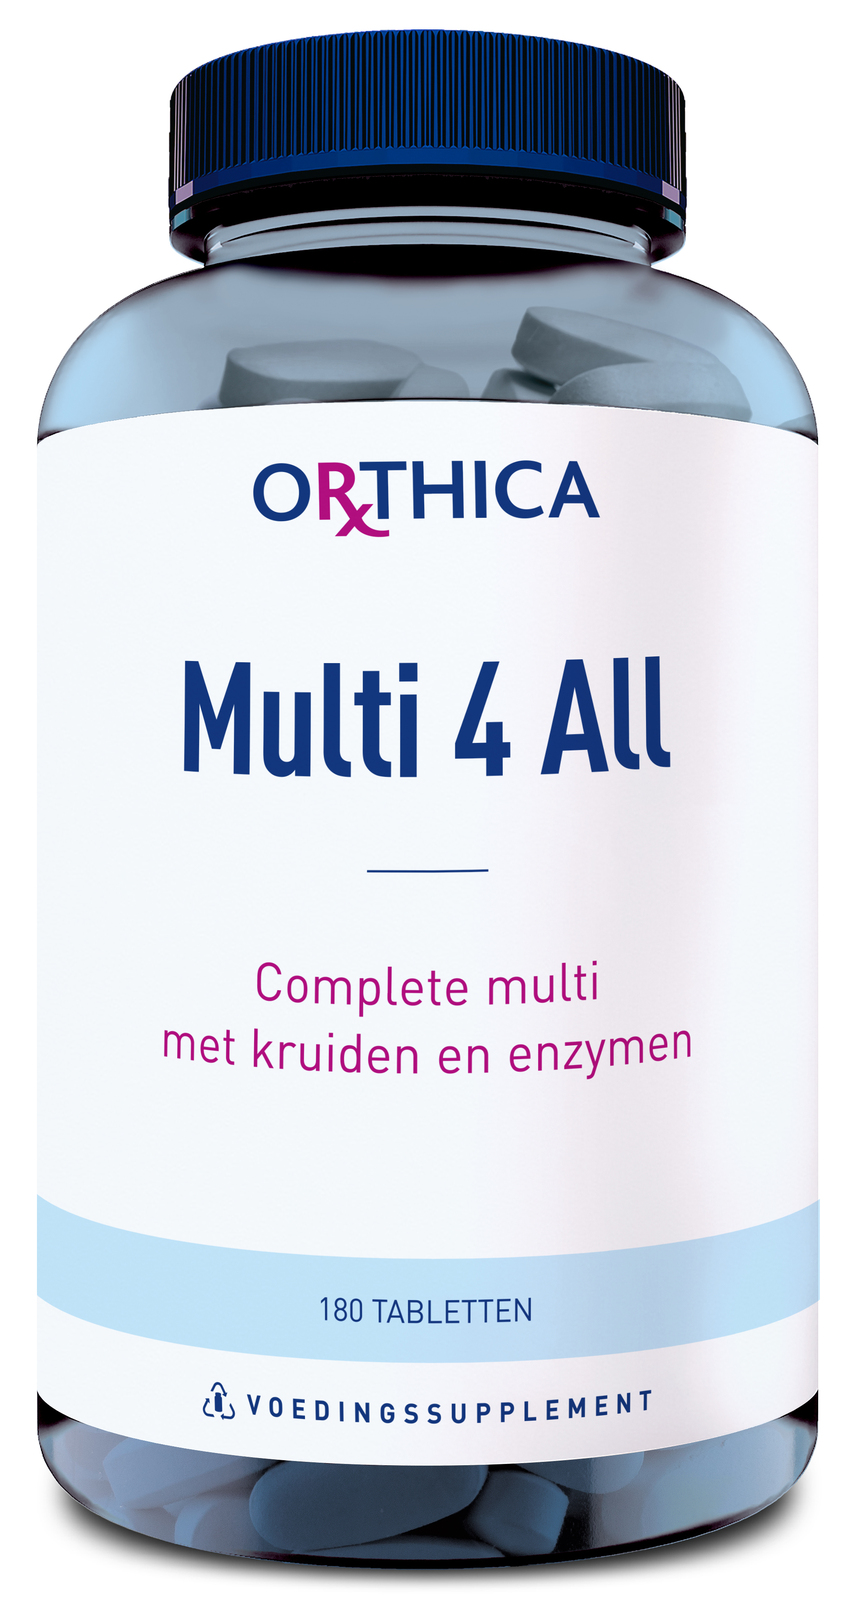 Orthica Multi 4 All Tabletten